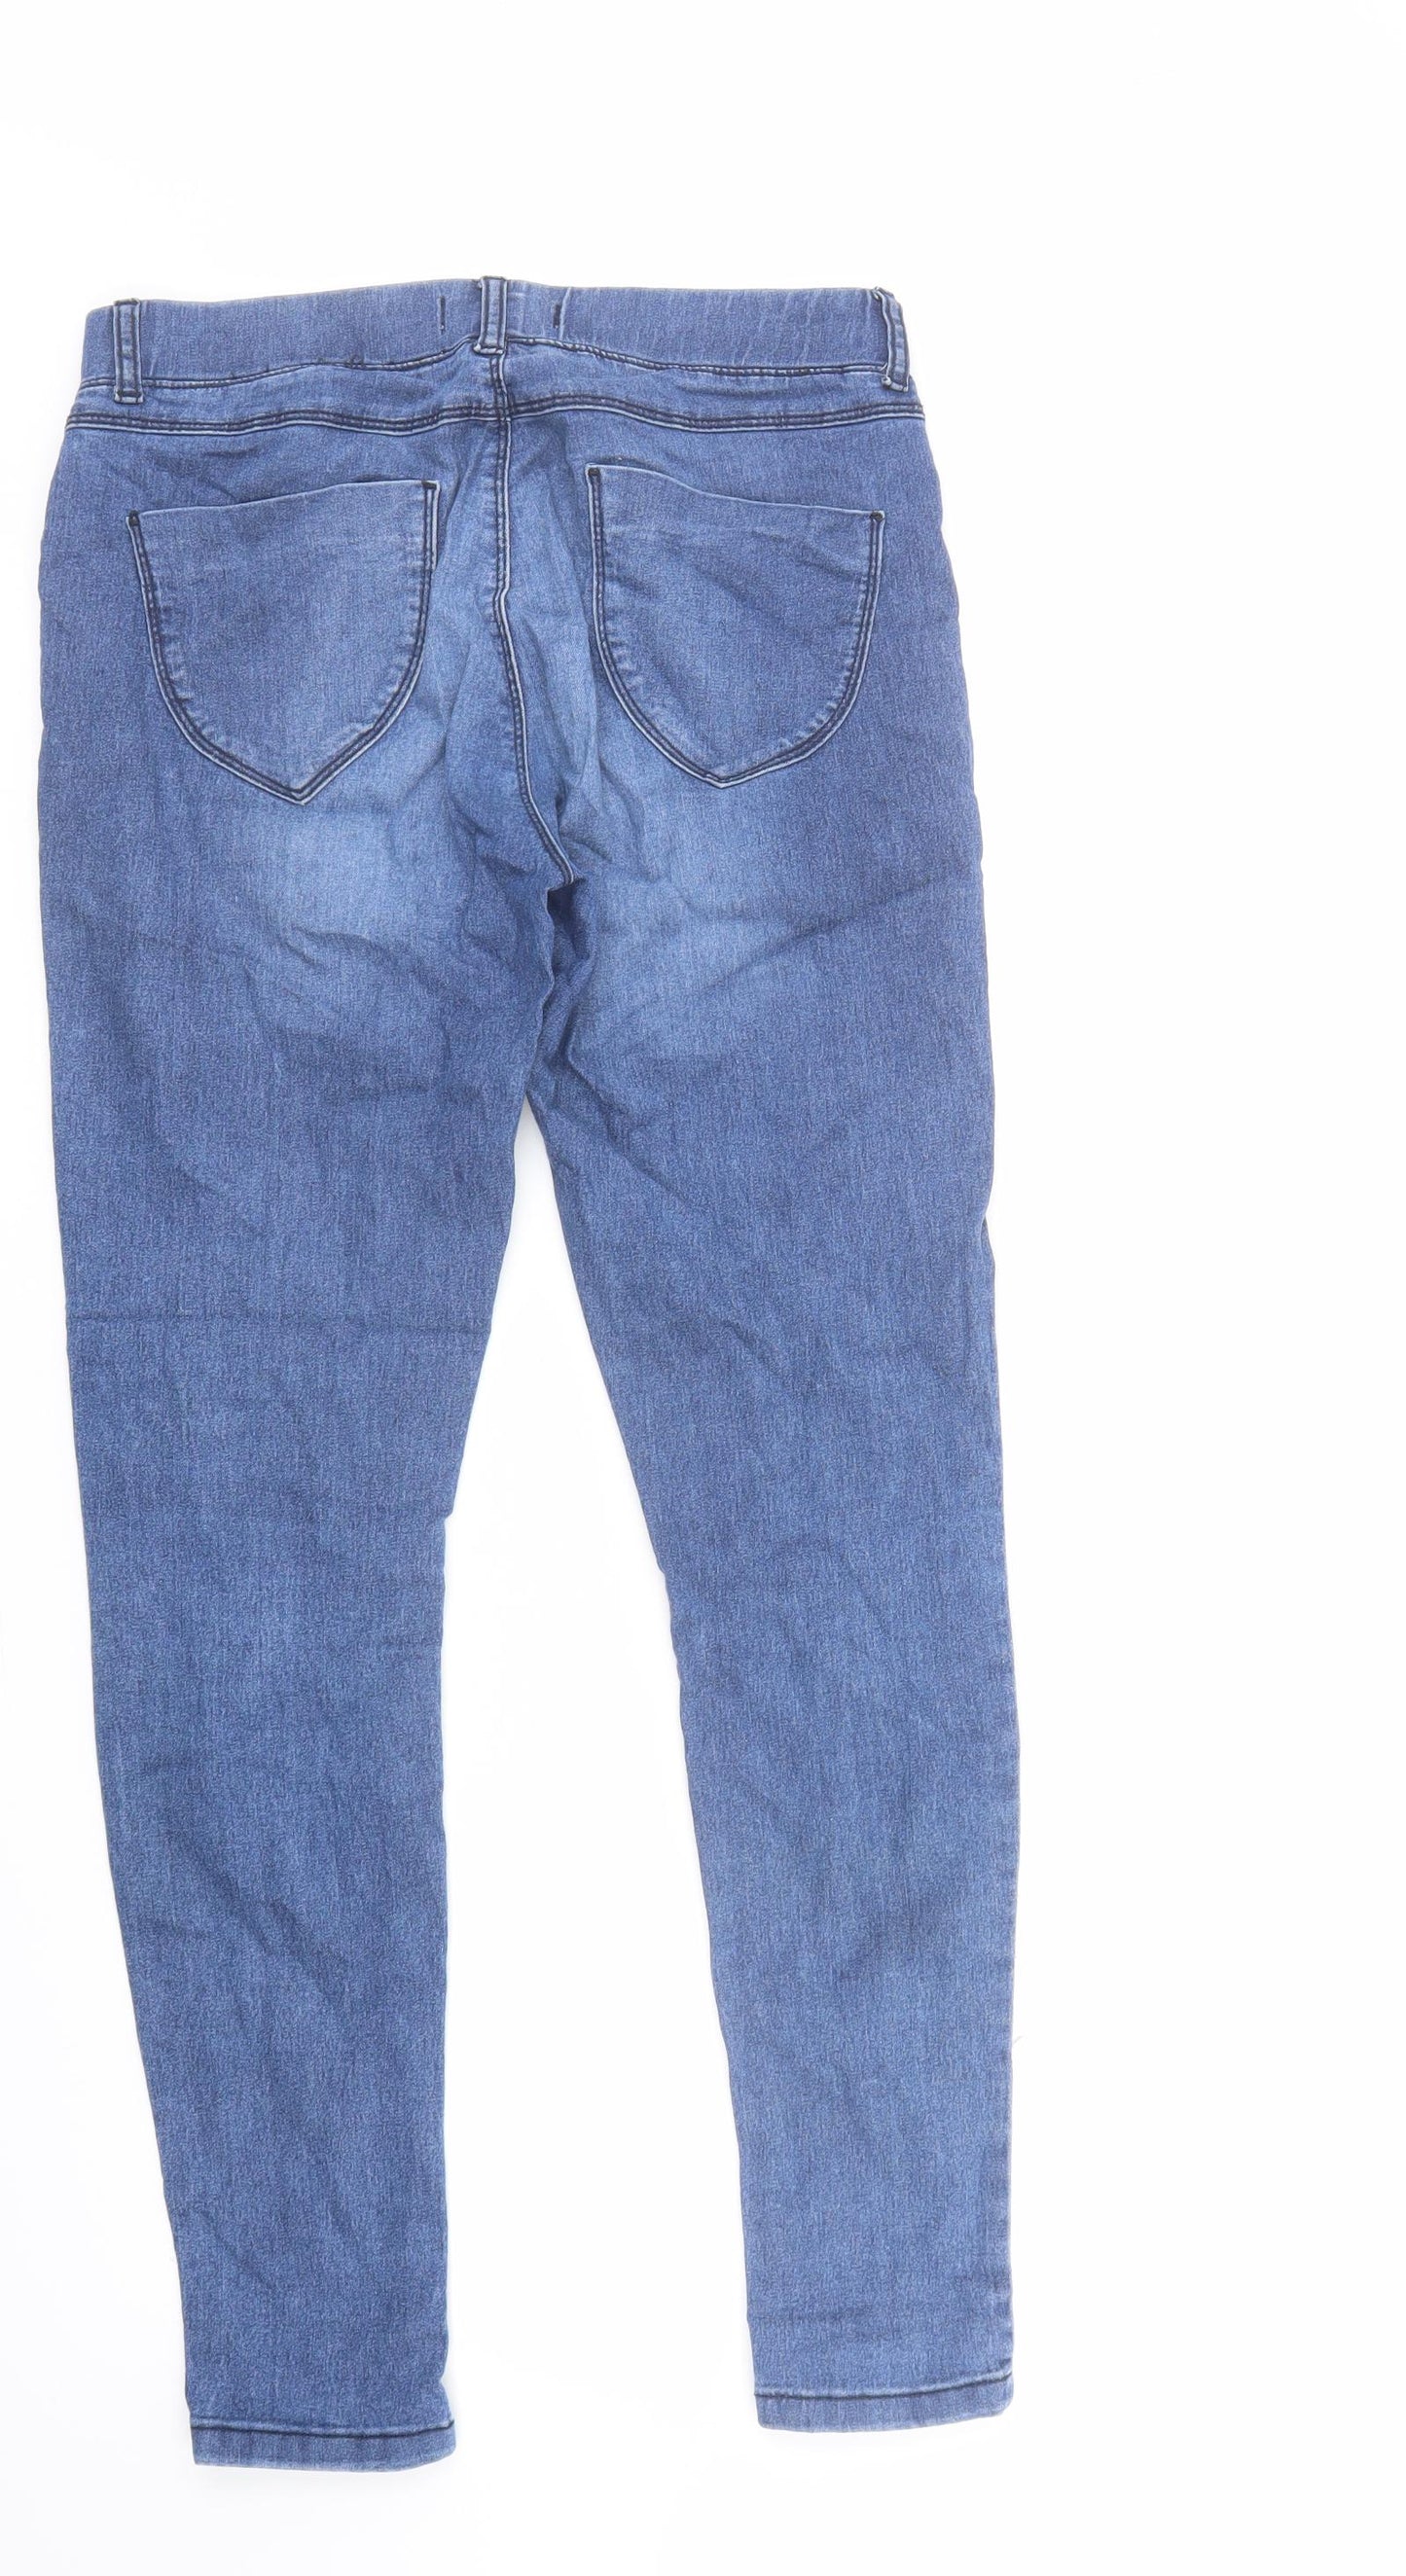 Dorothy Perkins Womens Blue Cotton Jegging Jeans Size 10 L29 in Regular - Elastic Waist